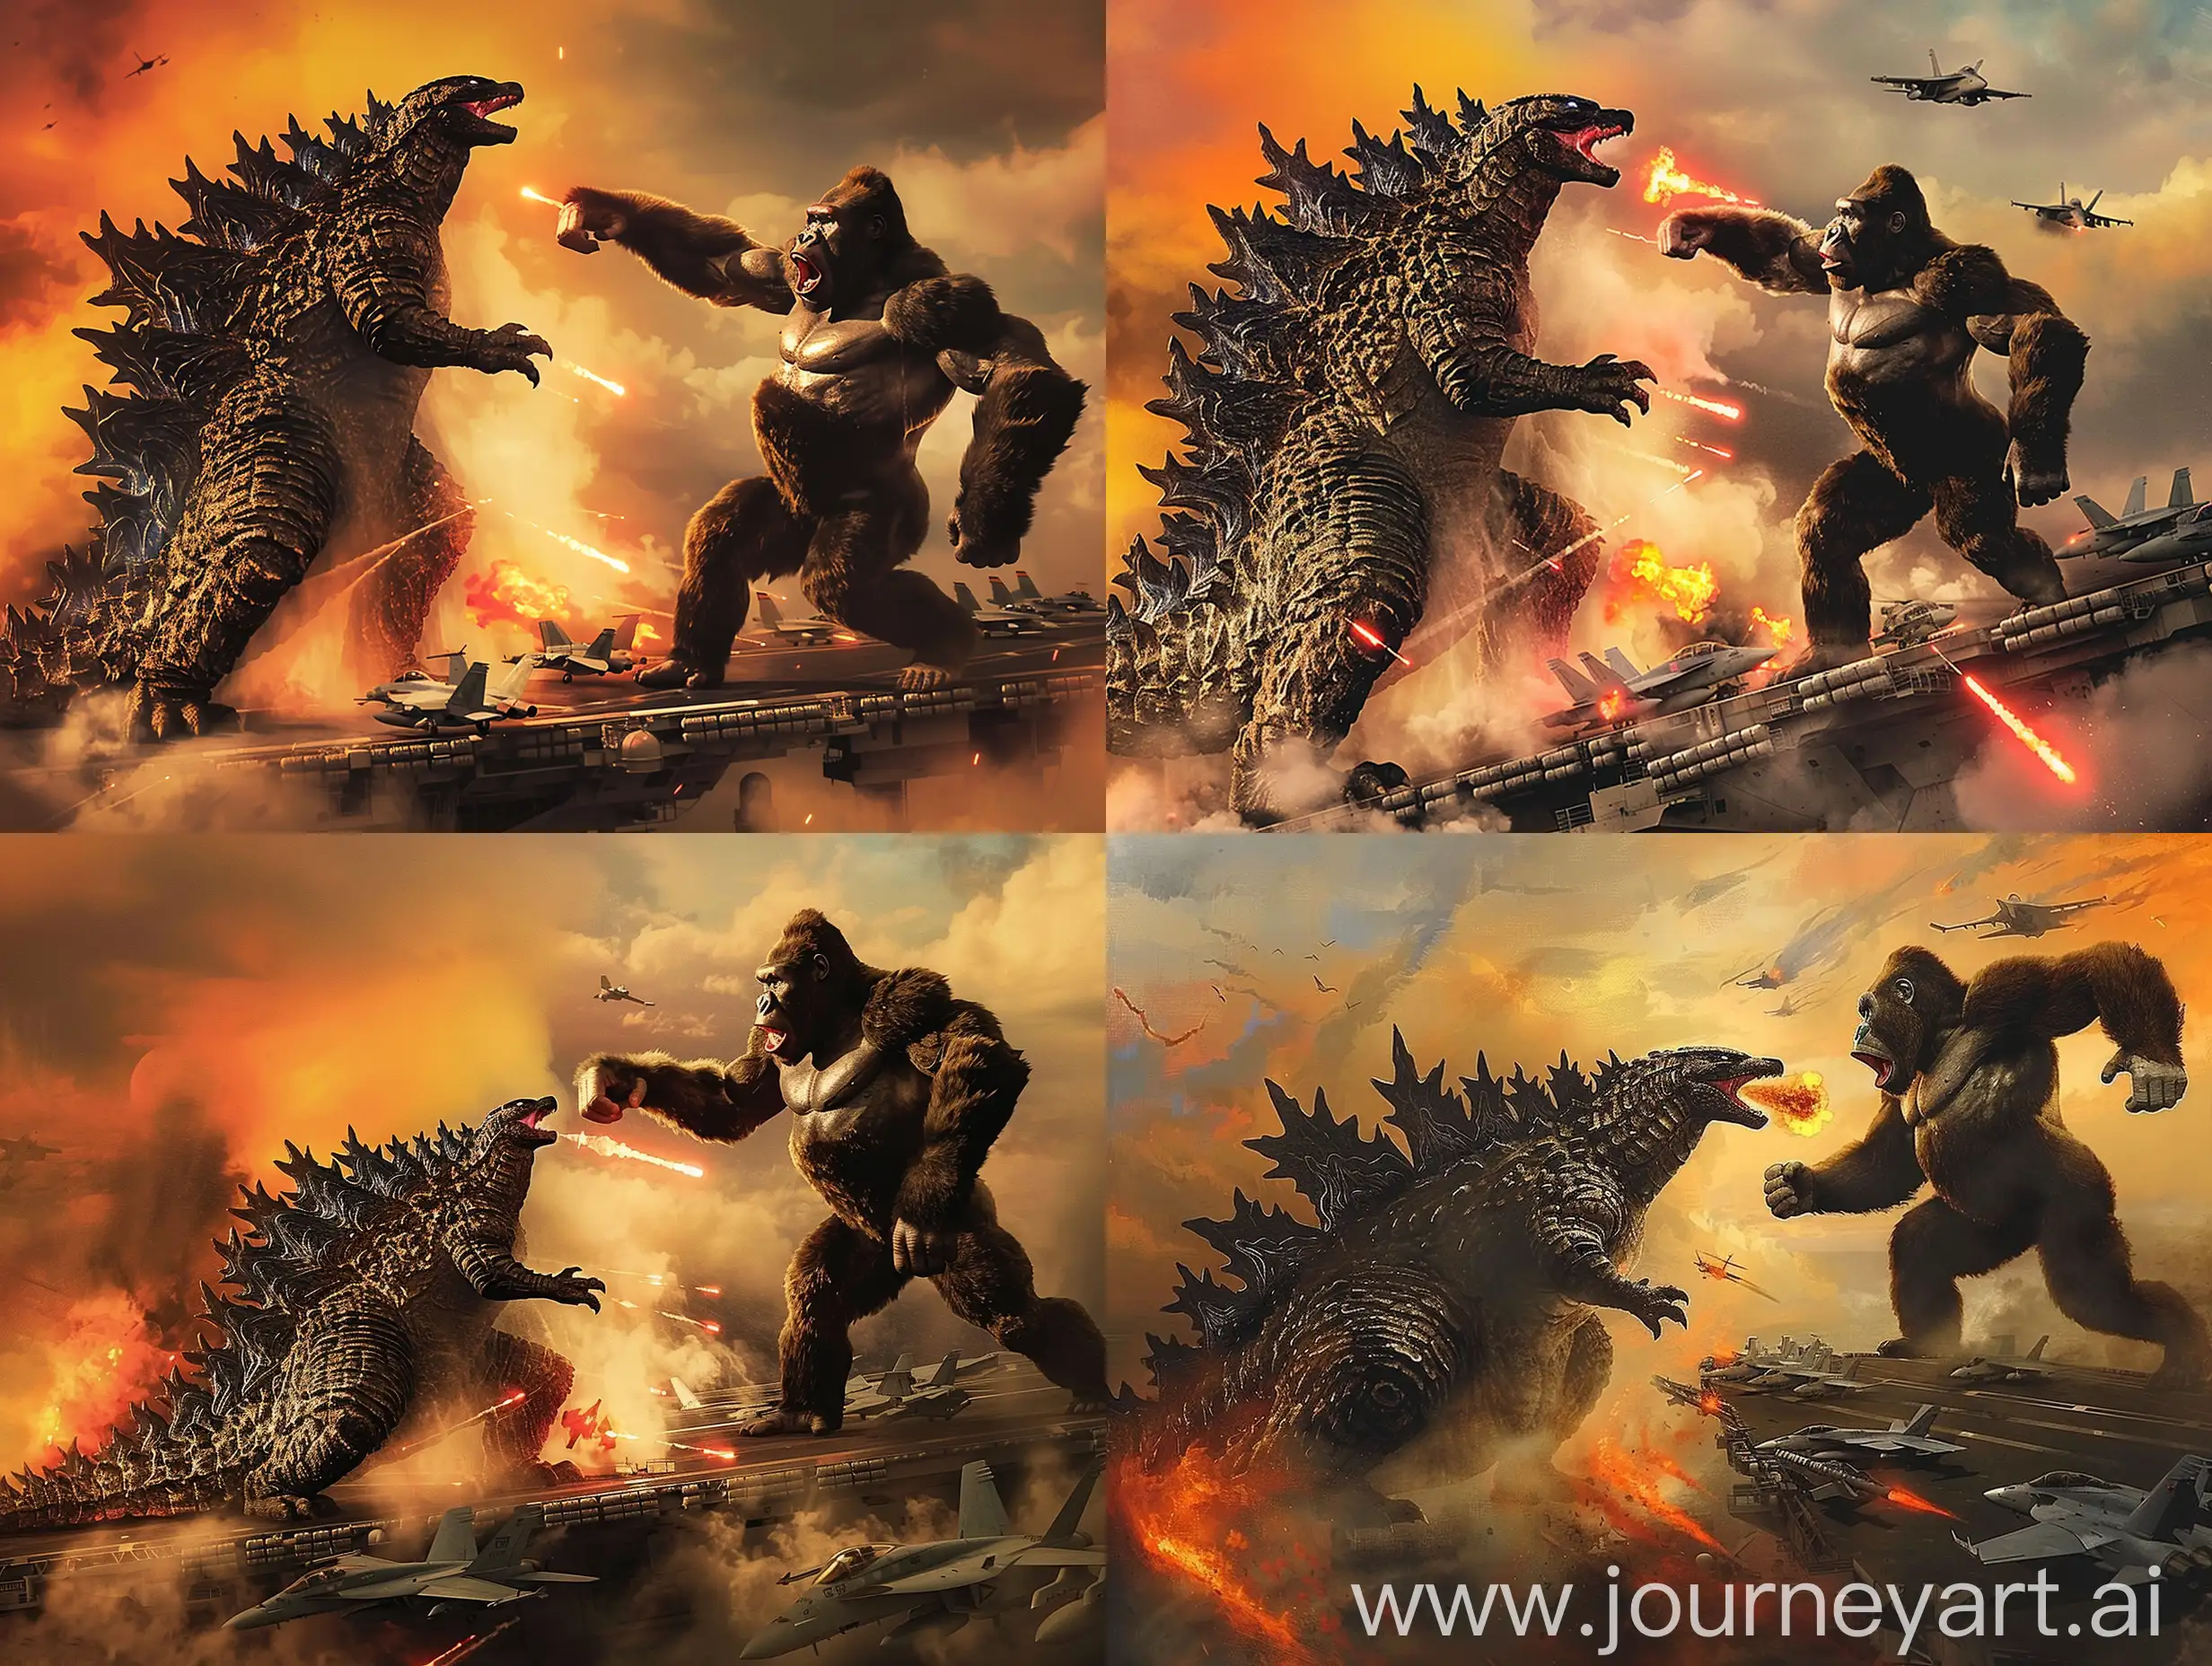 Epic-Godzilla-vs-King-Kong-Battle-on-Engulfed-Aircraft-Carrier